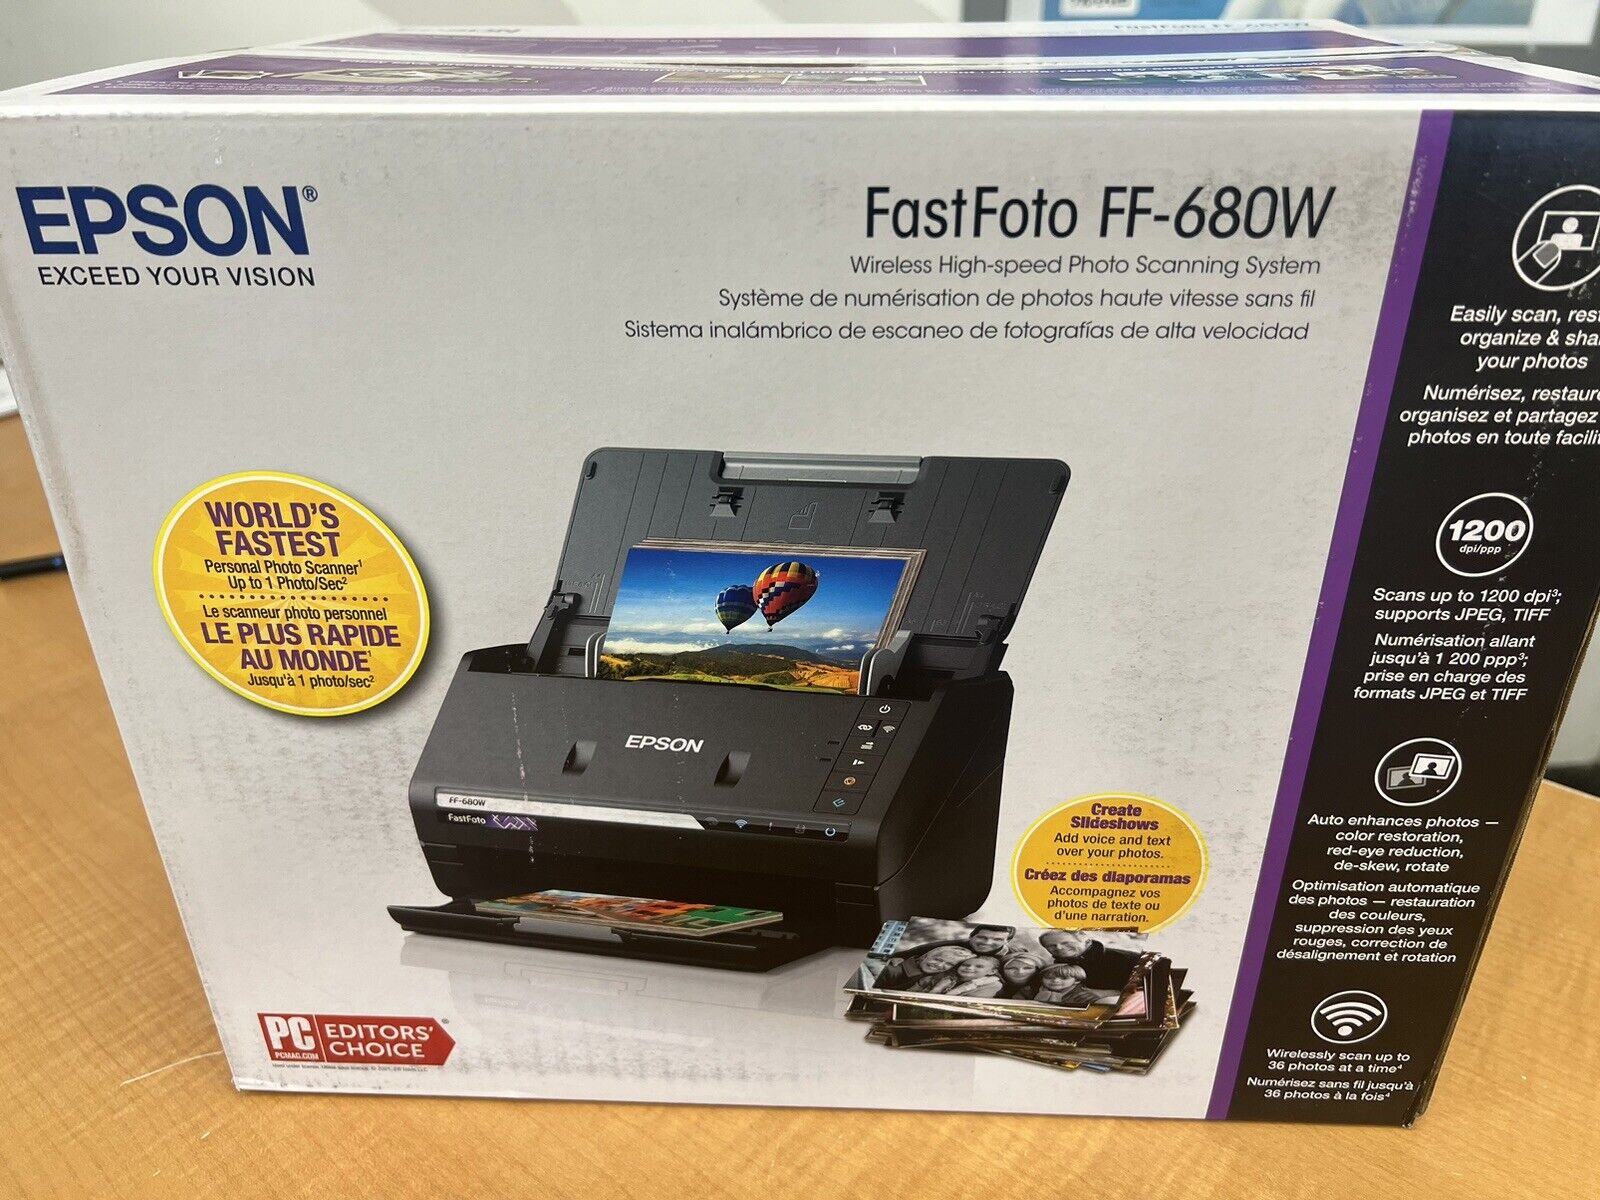 Epson FastFoto FF-680W Wireless High-speed Photo Scanning System - Black